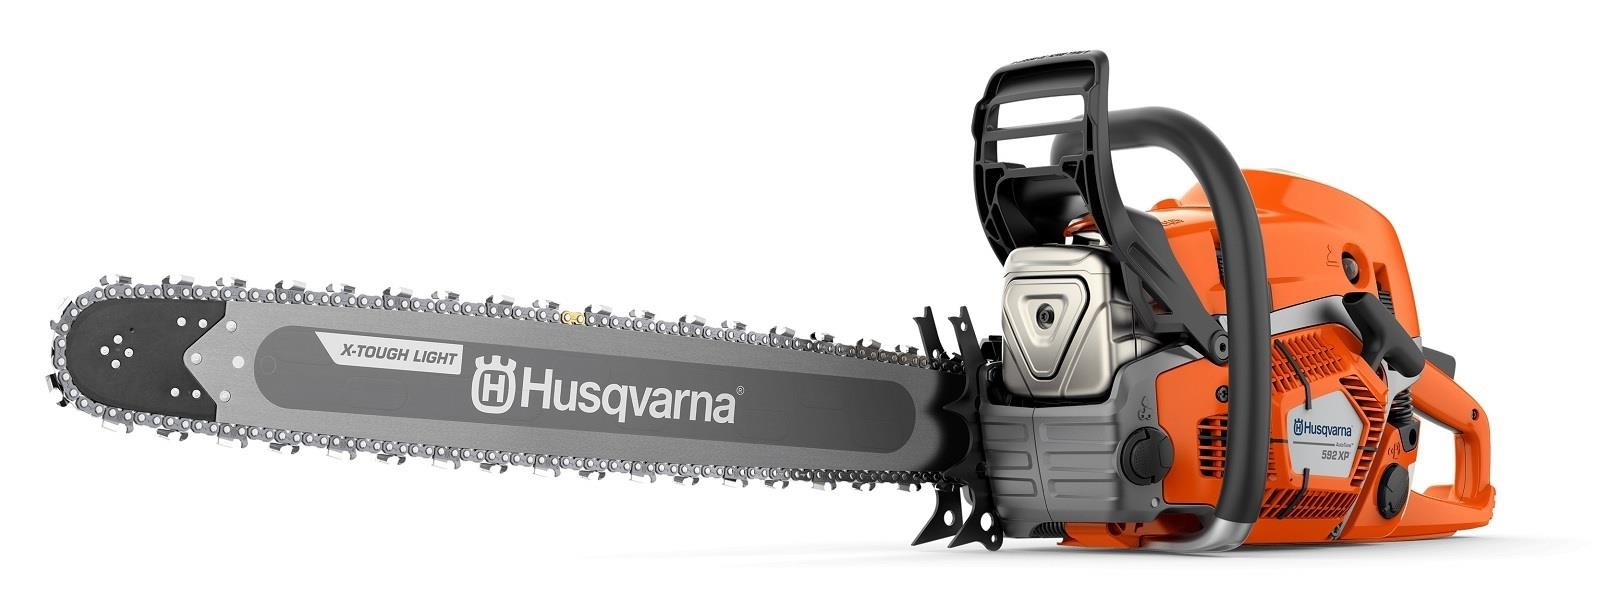 Motorsäge Husqvarna 445 Einstellwerkzeug